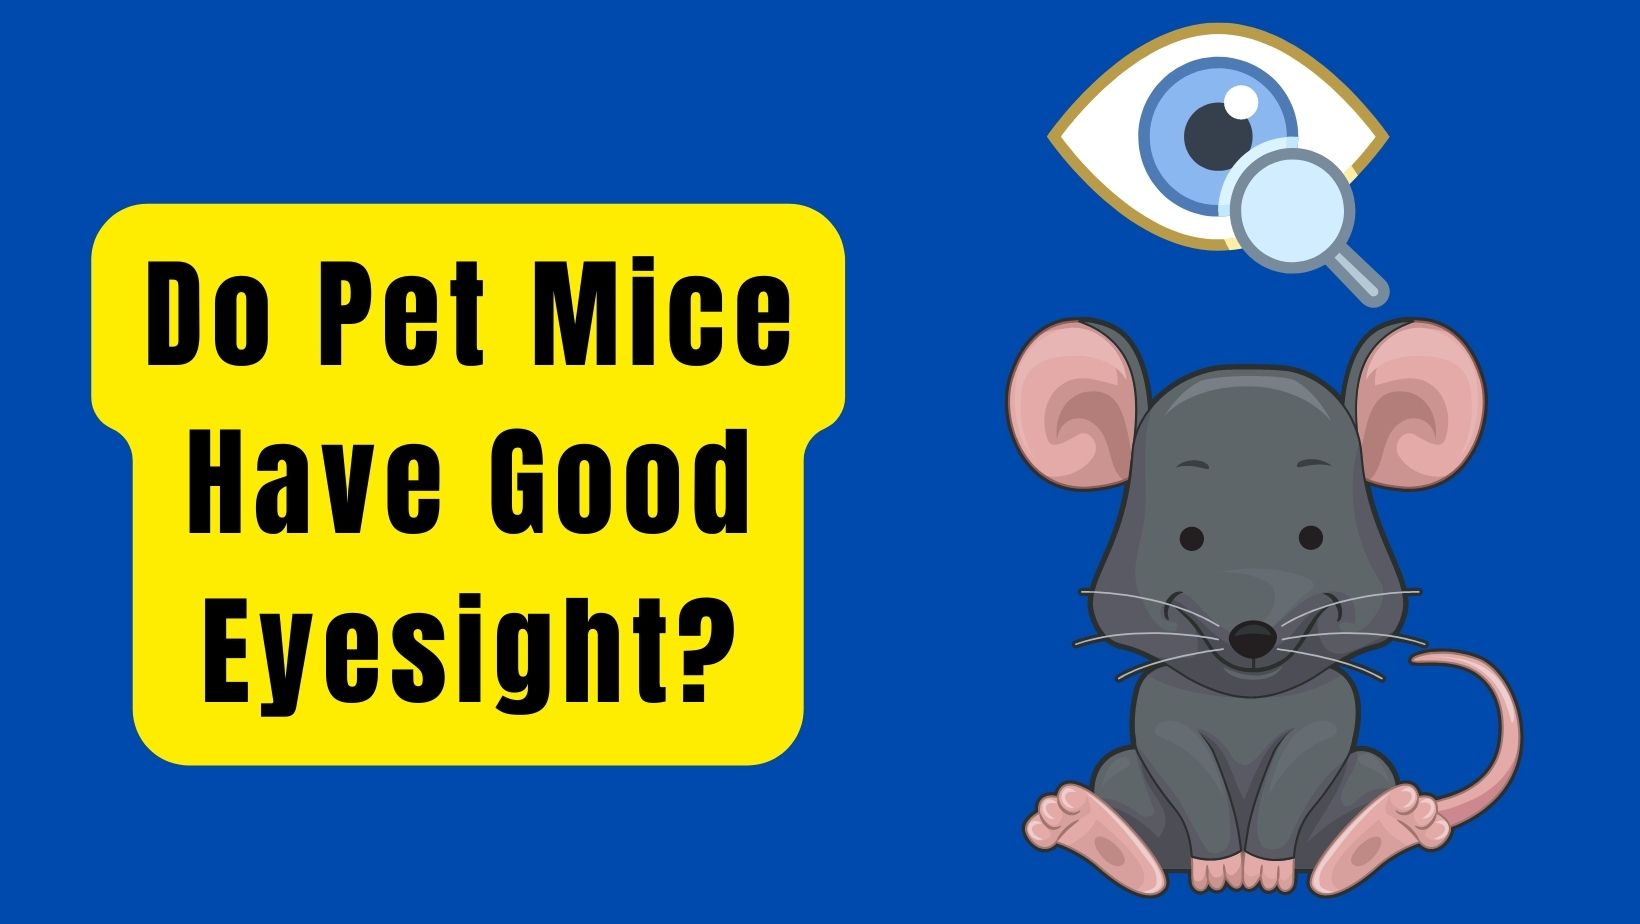 Do Pet Mice Have Good Eyesight?